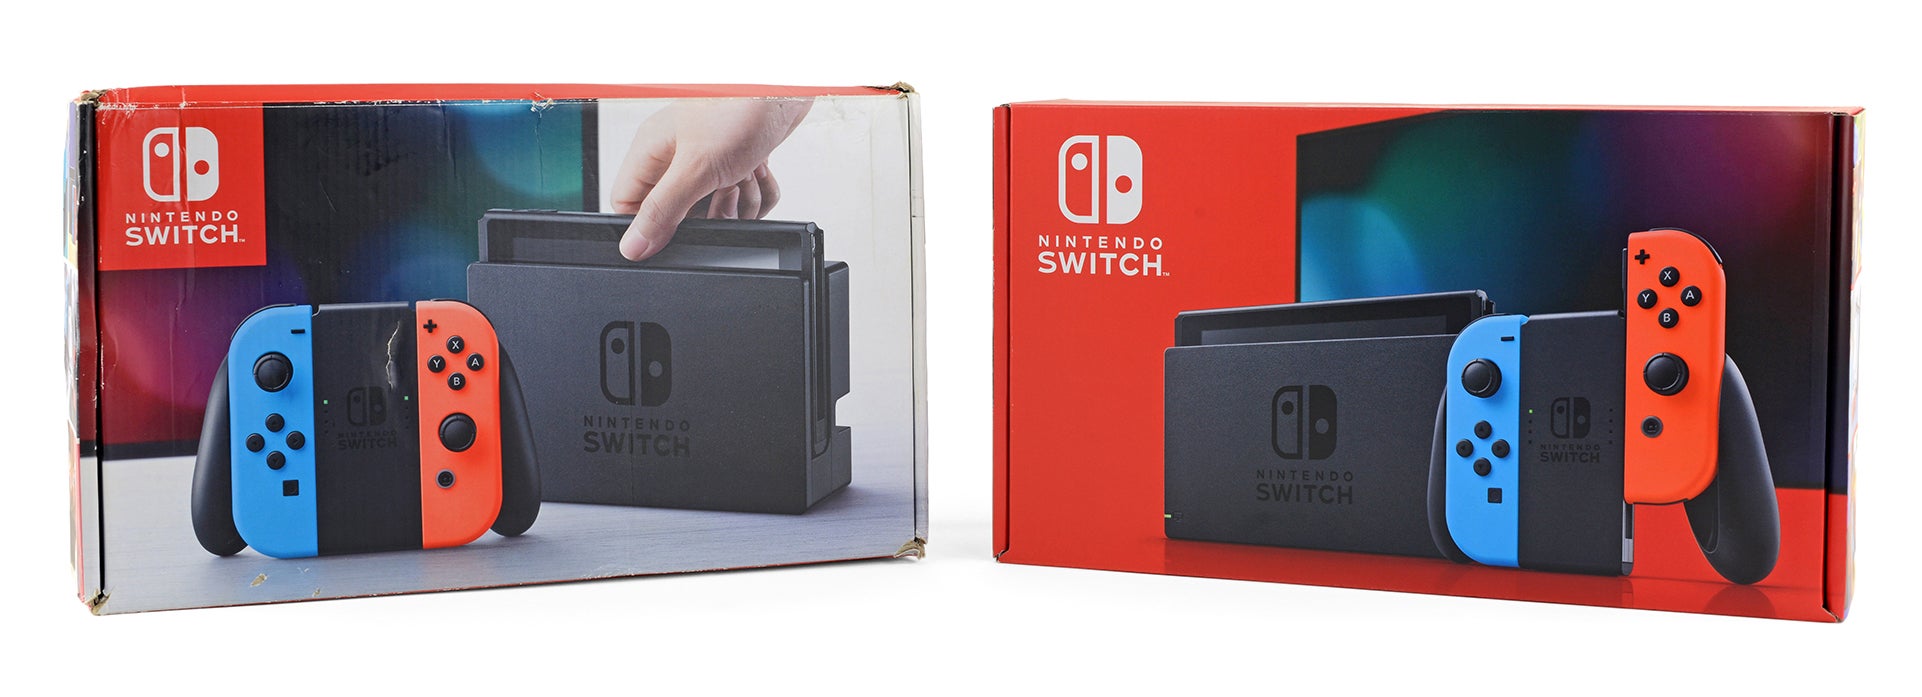 Сколько весит nintendo switch. Nintendo Switch 2. Нинтендо свитч 2017. Коробка Нинтендо свитч 2. Nintendo Switch v1.